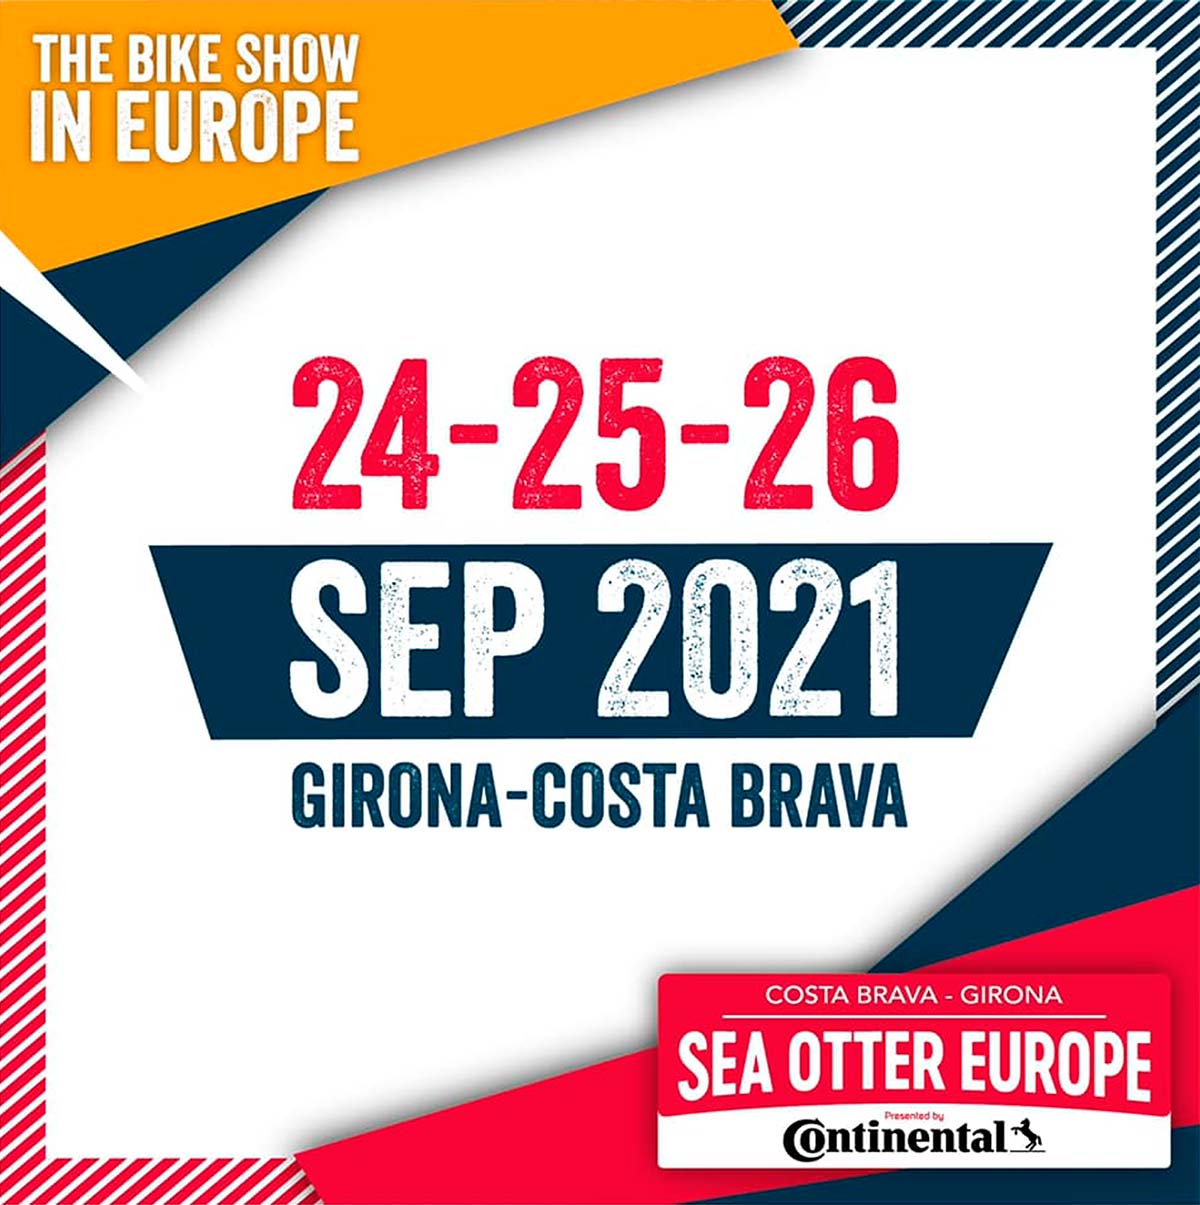 En TodoMountainBike: El festival ciclista Sea Otter Europe 2021 se celebrará en otoño